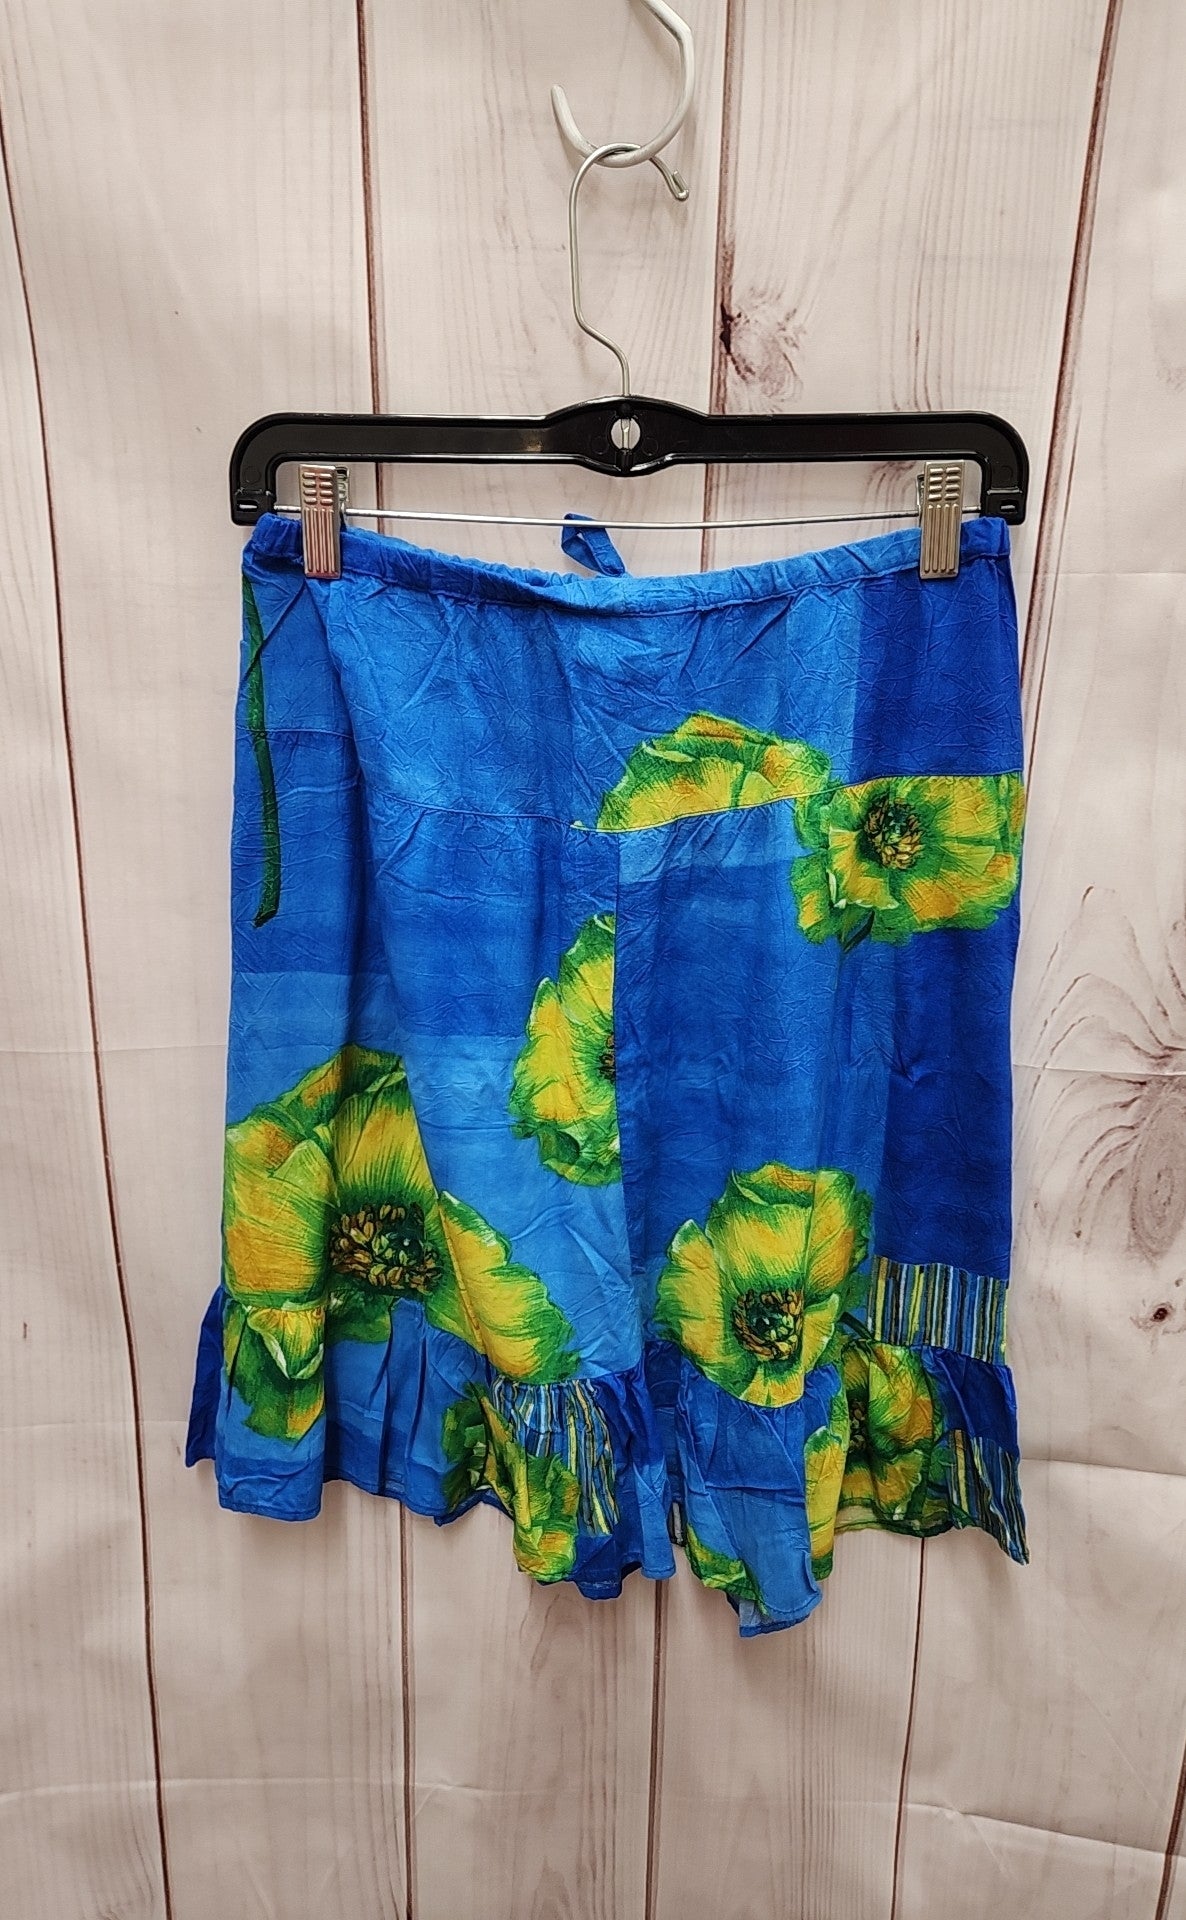 Jams World Women's Size S Blue Floral Skirt